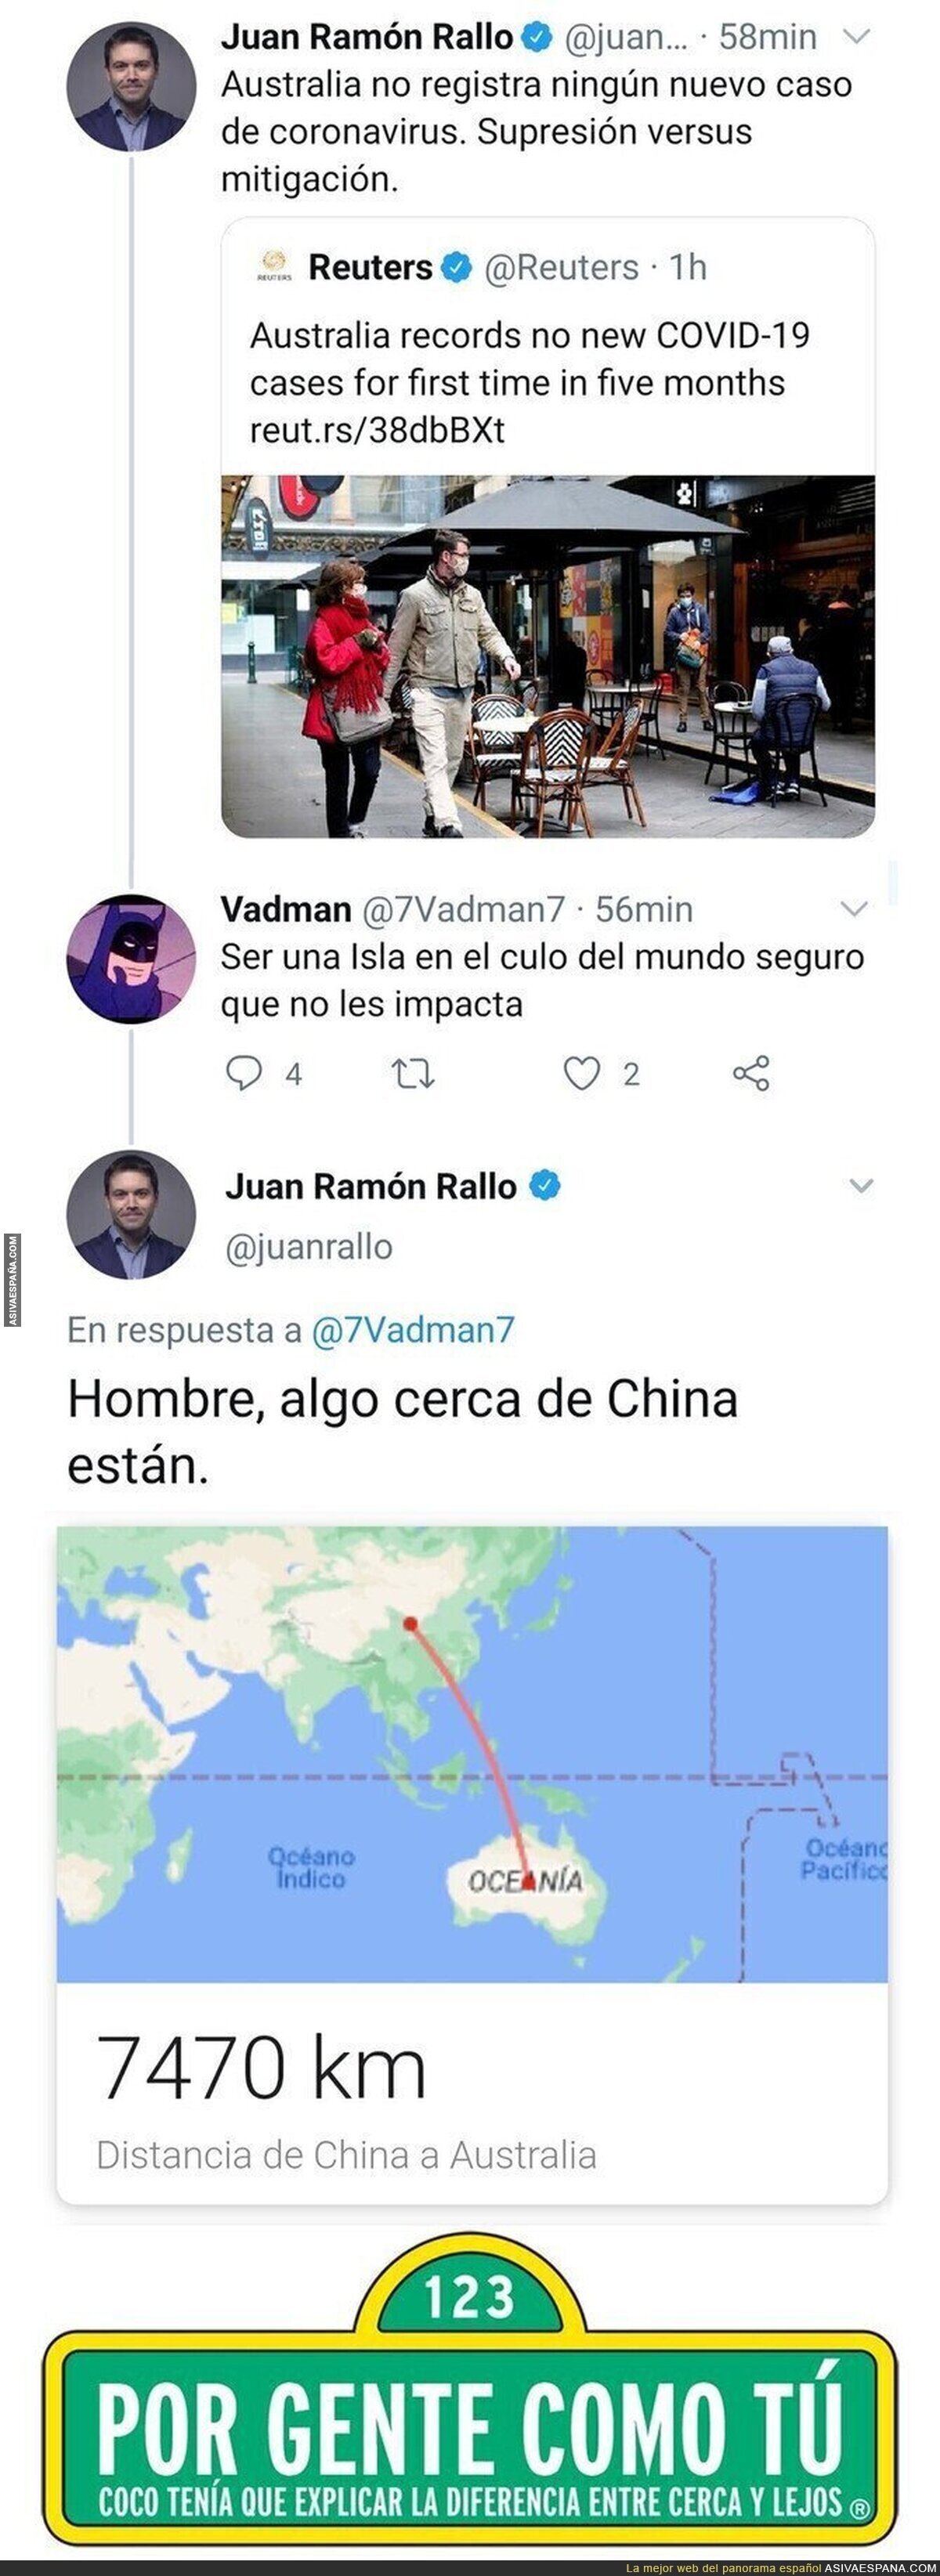 Juan Ramón Rallo no deja de sorprender 